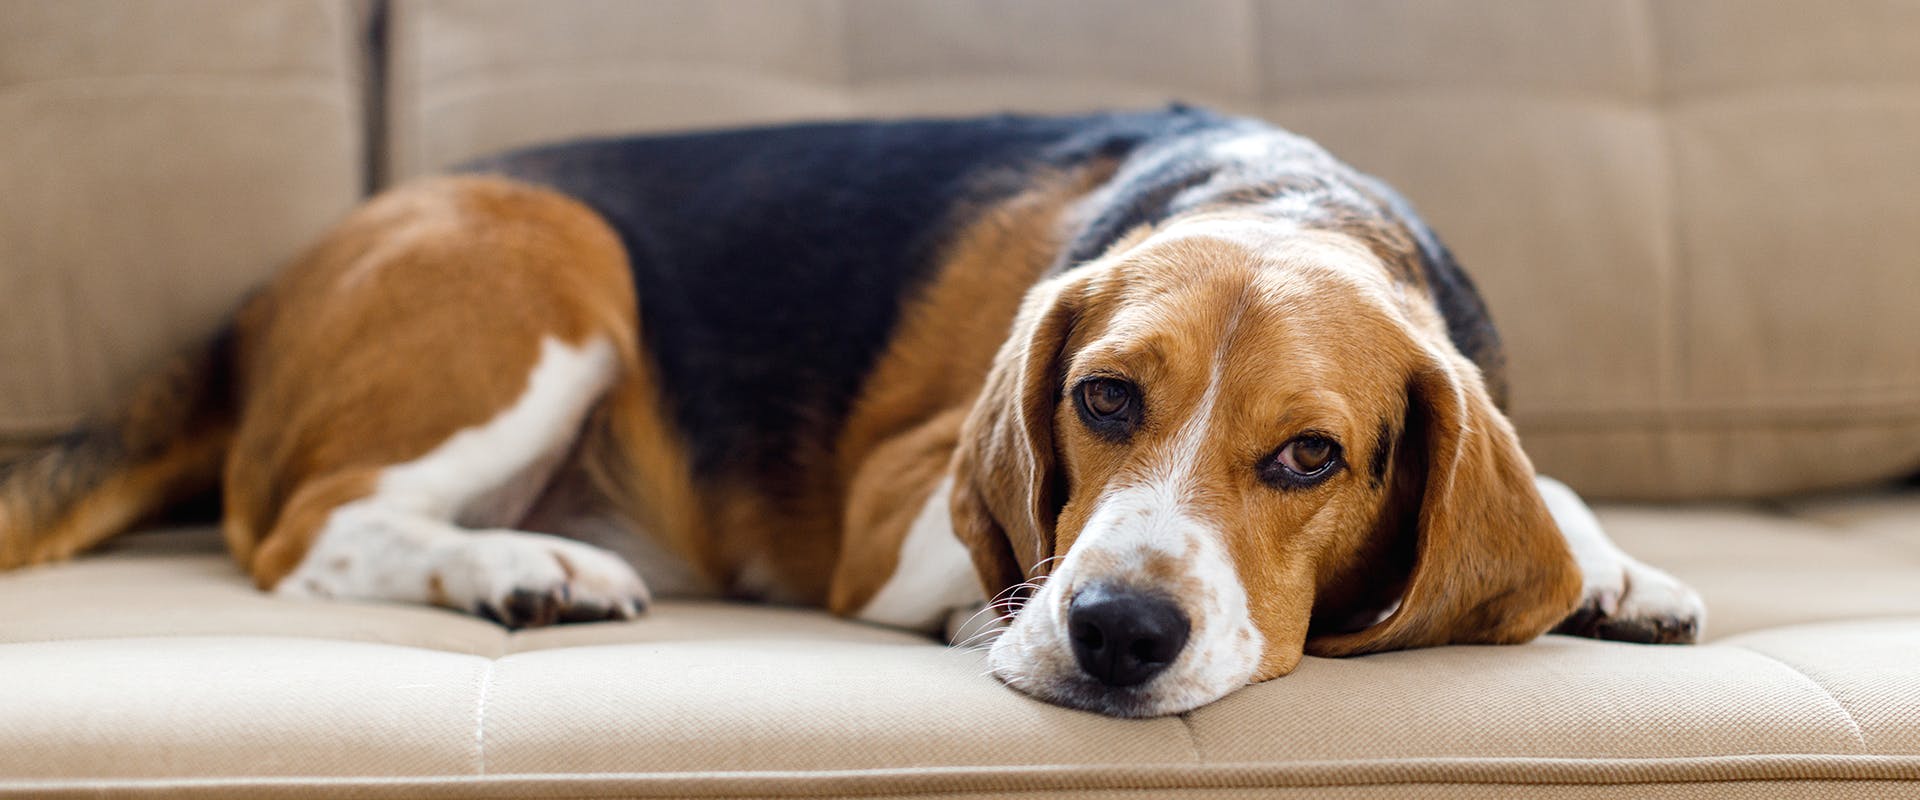 Do dogs get sad? A sad looking Beagle sitting on a sofa